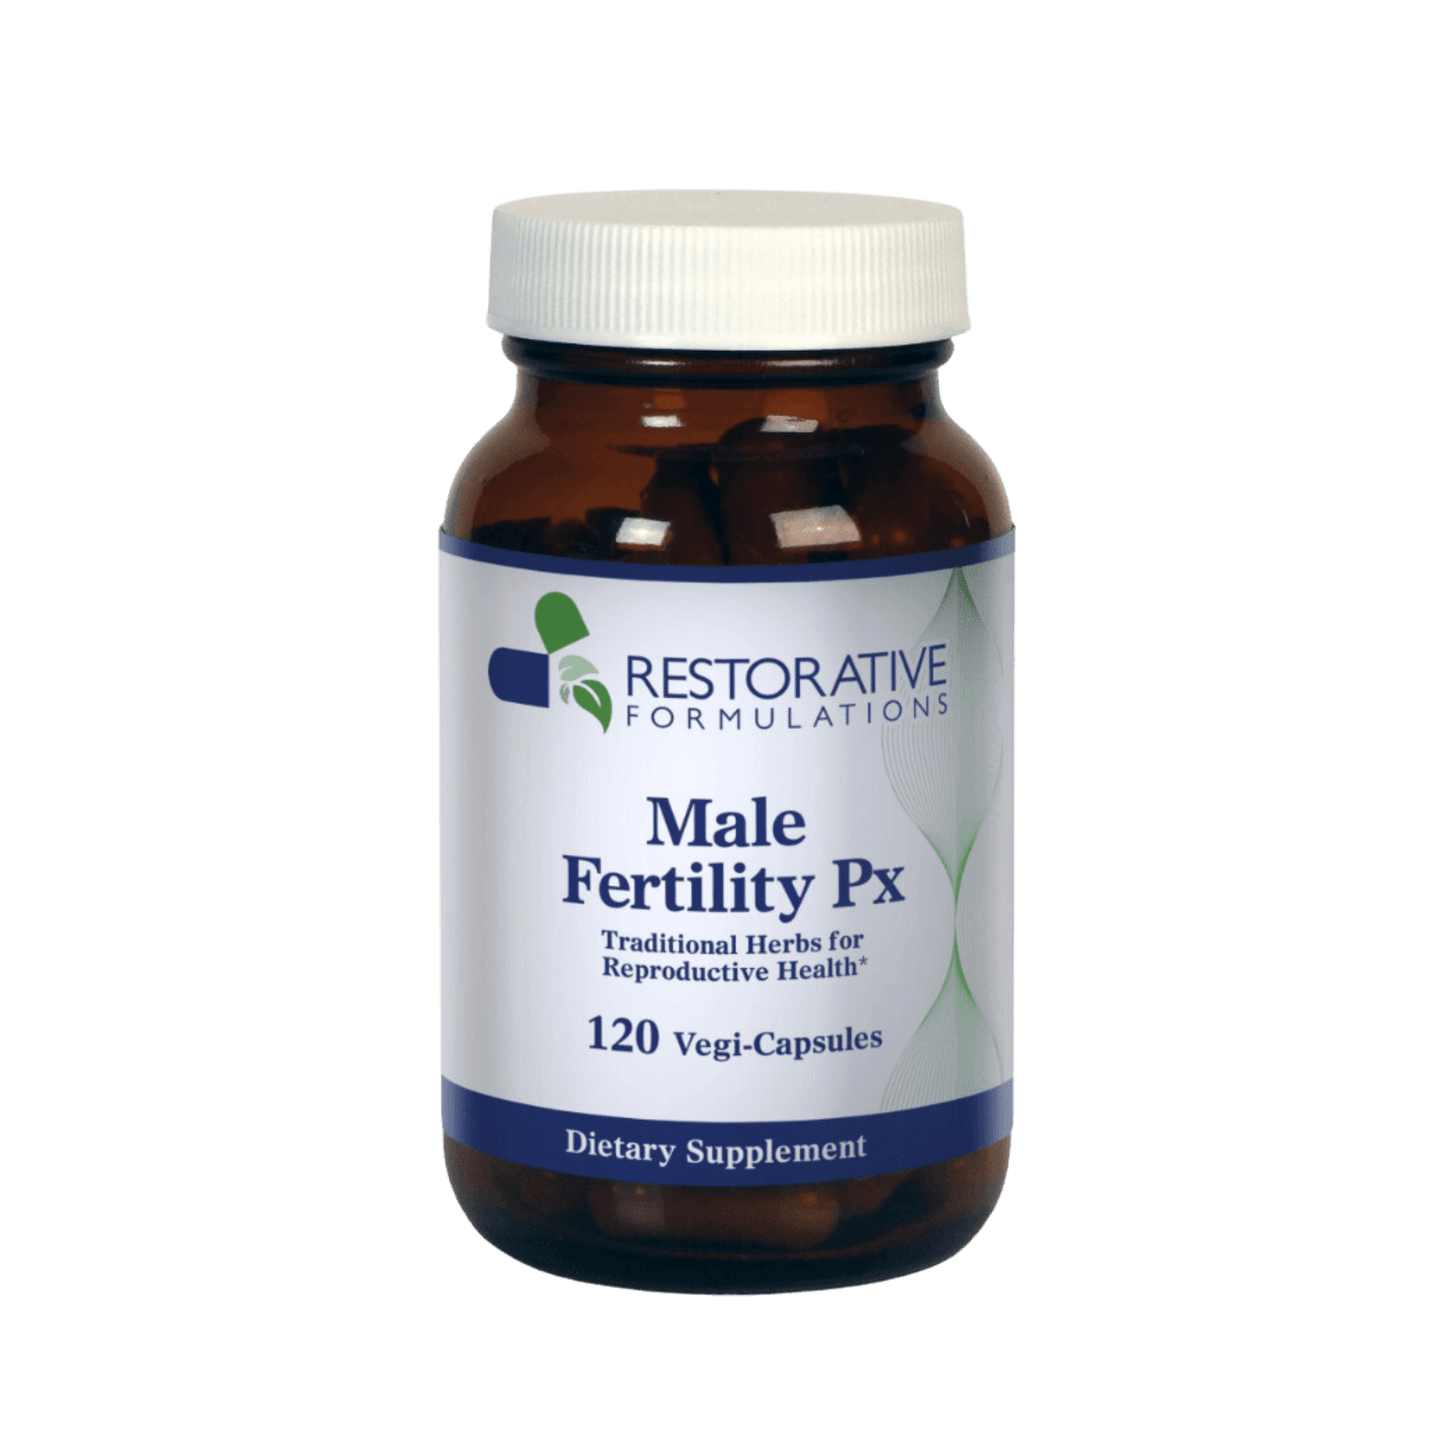 Restorative Formulations Male Fertility Px Capsules